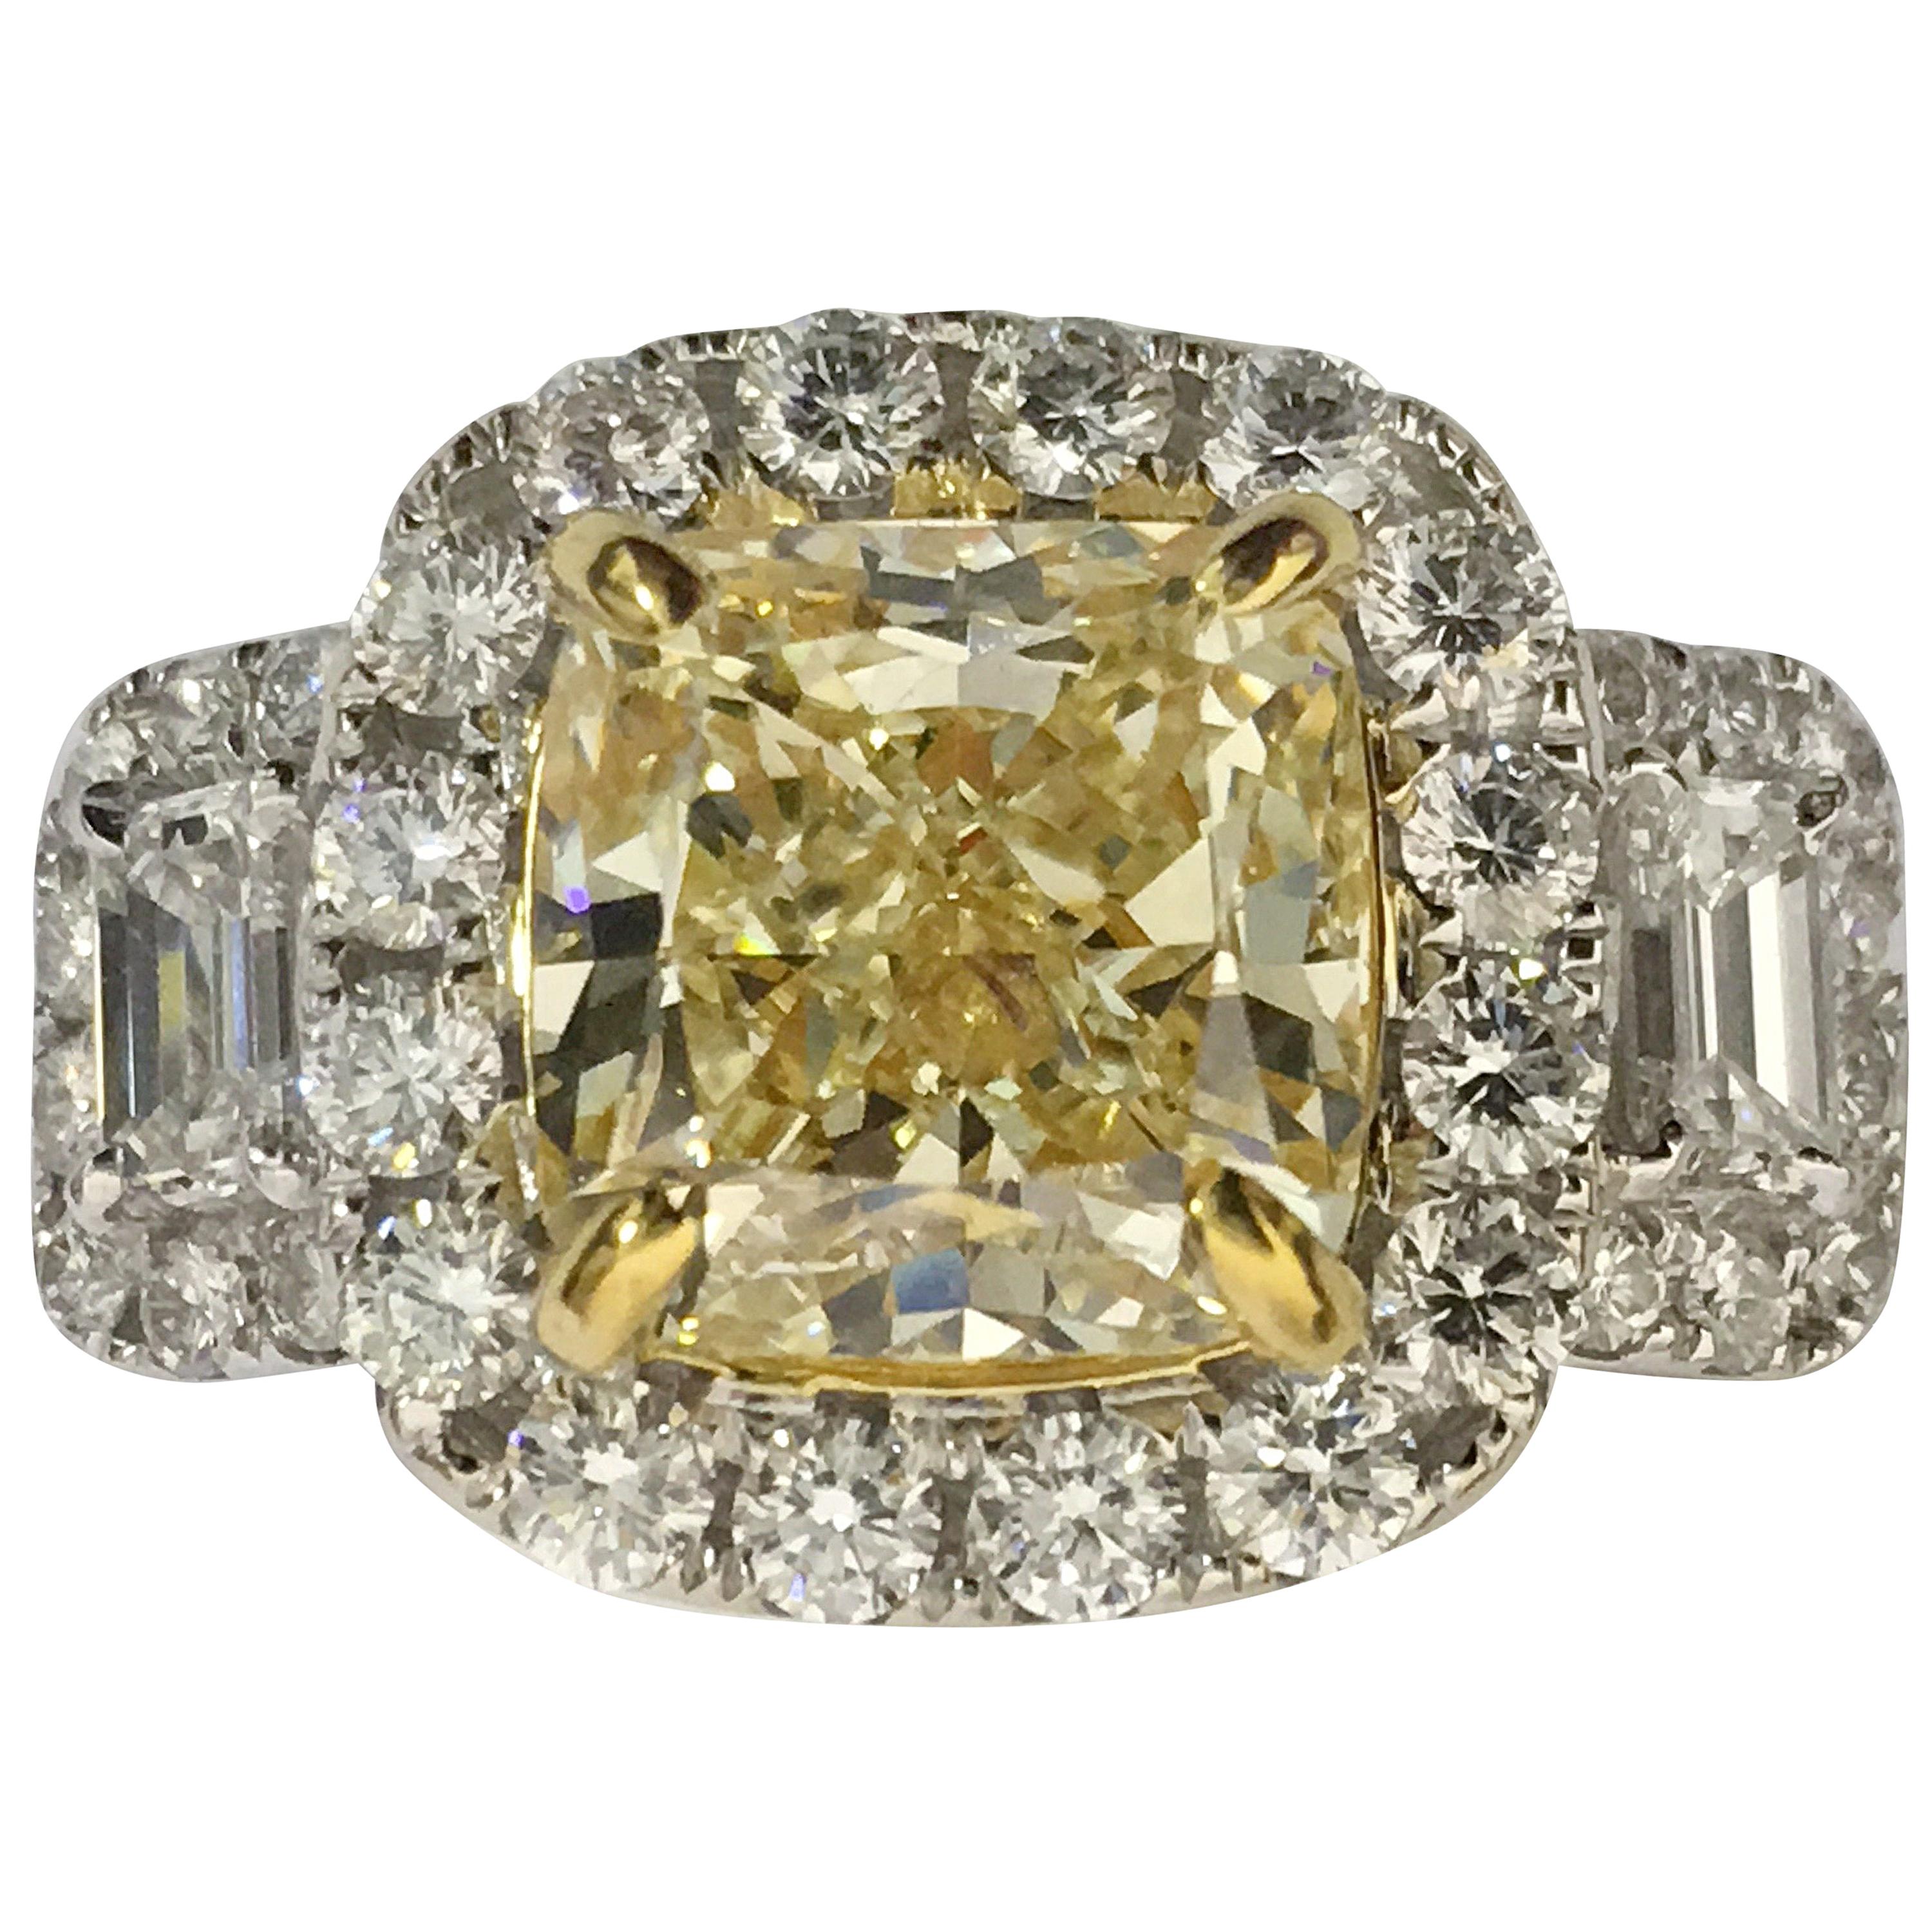 IGL Certified 3.00 Carat Yellow and White Diamond Ring